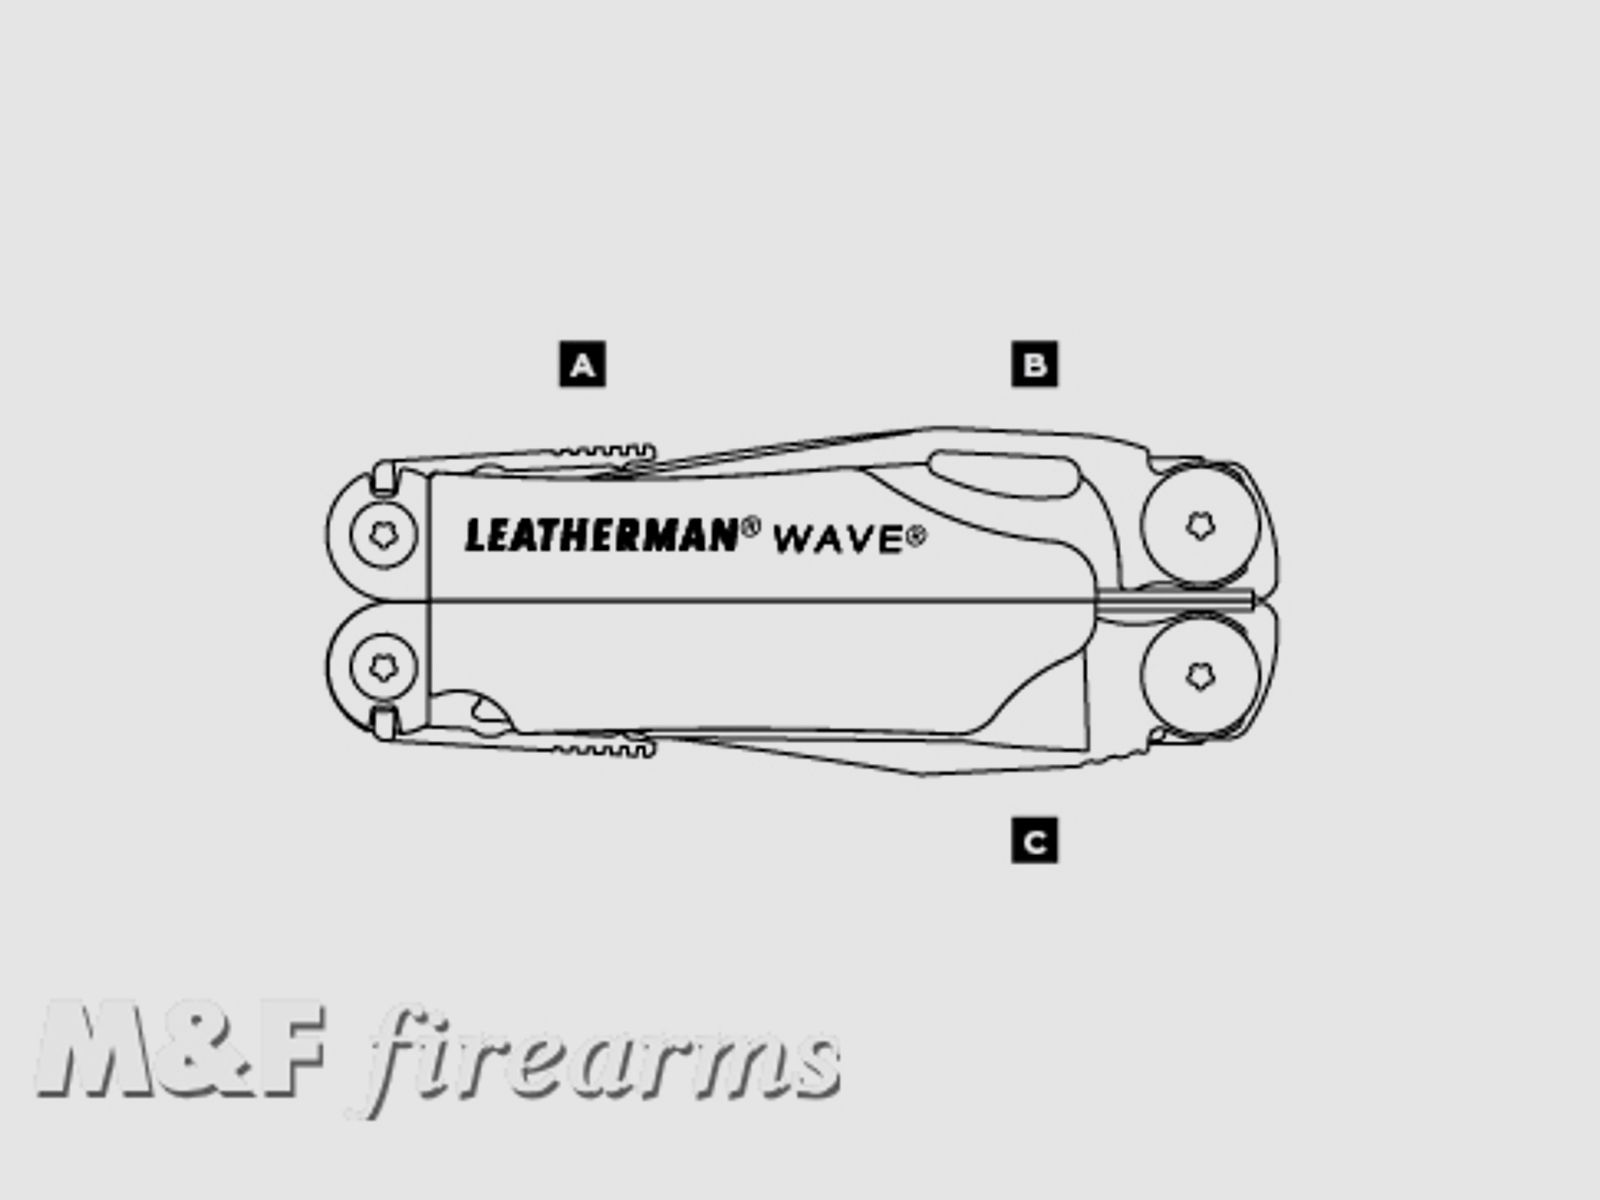 Leatherman WAVE. DAS BELIEBTESTE LEATHERMAN!